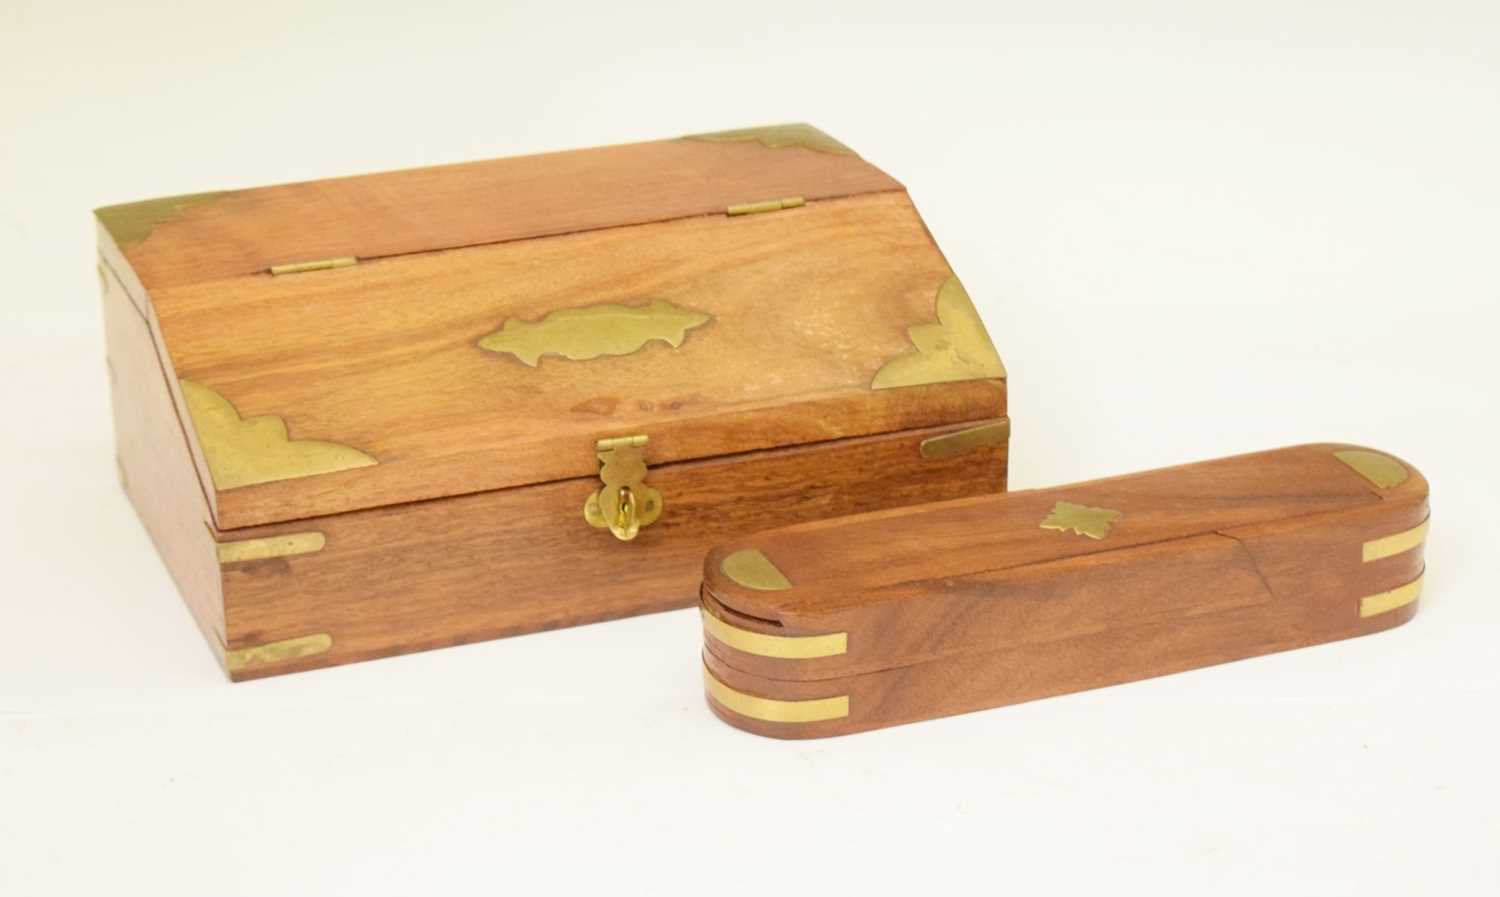 Hardwood and brass inlaid desk box